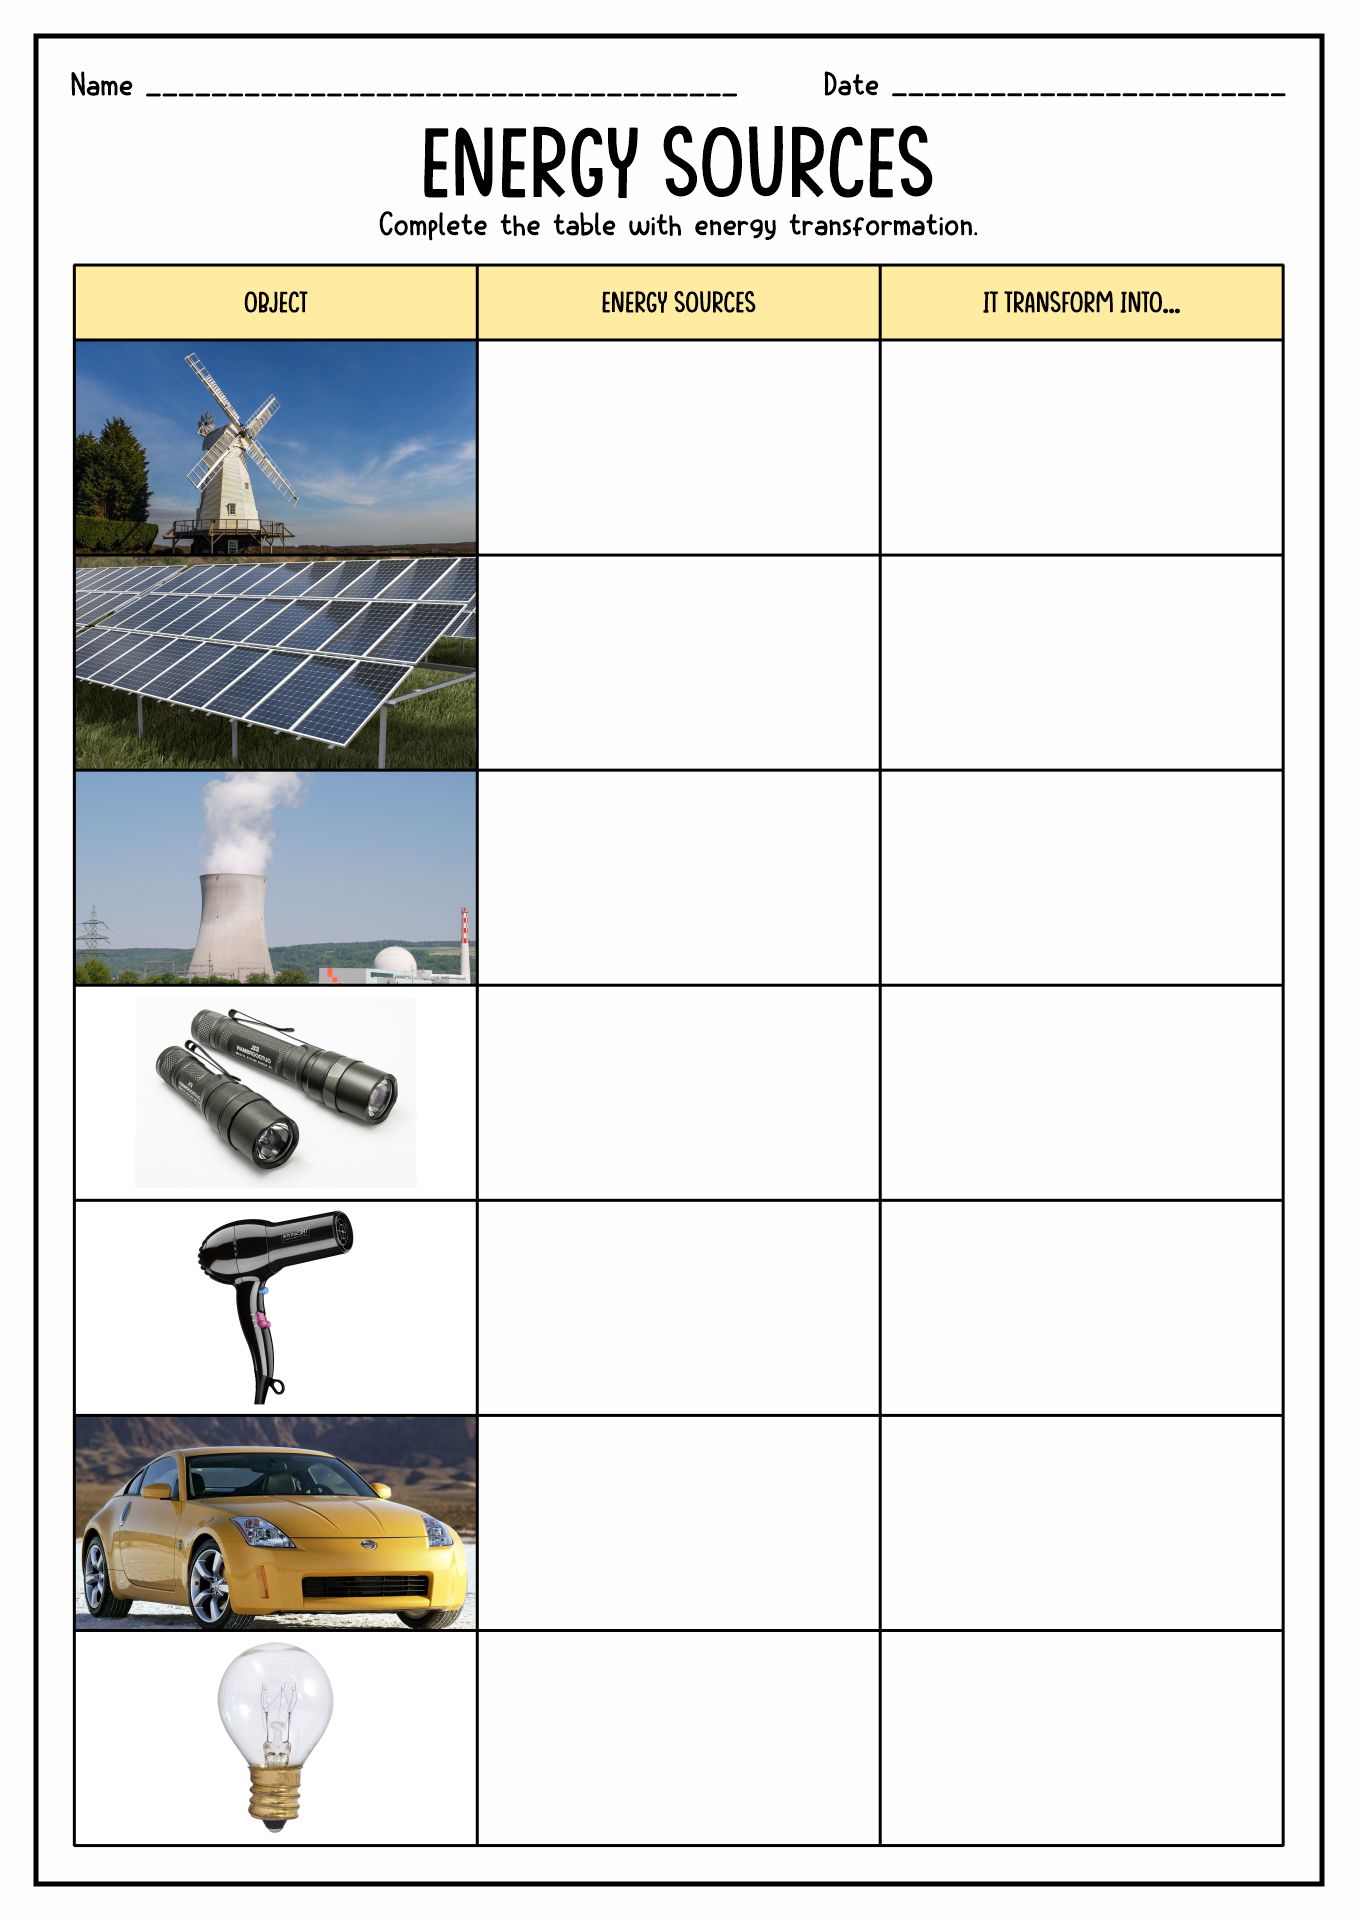 Basic Forms of Energy Worksheets Image